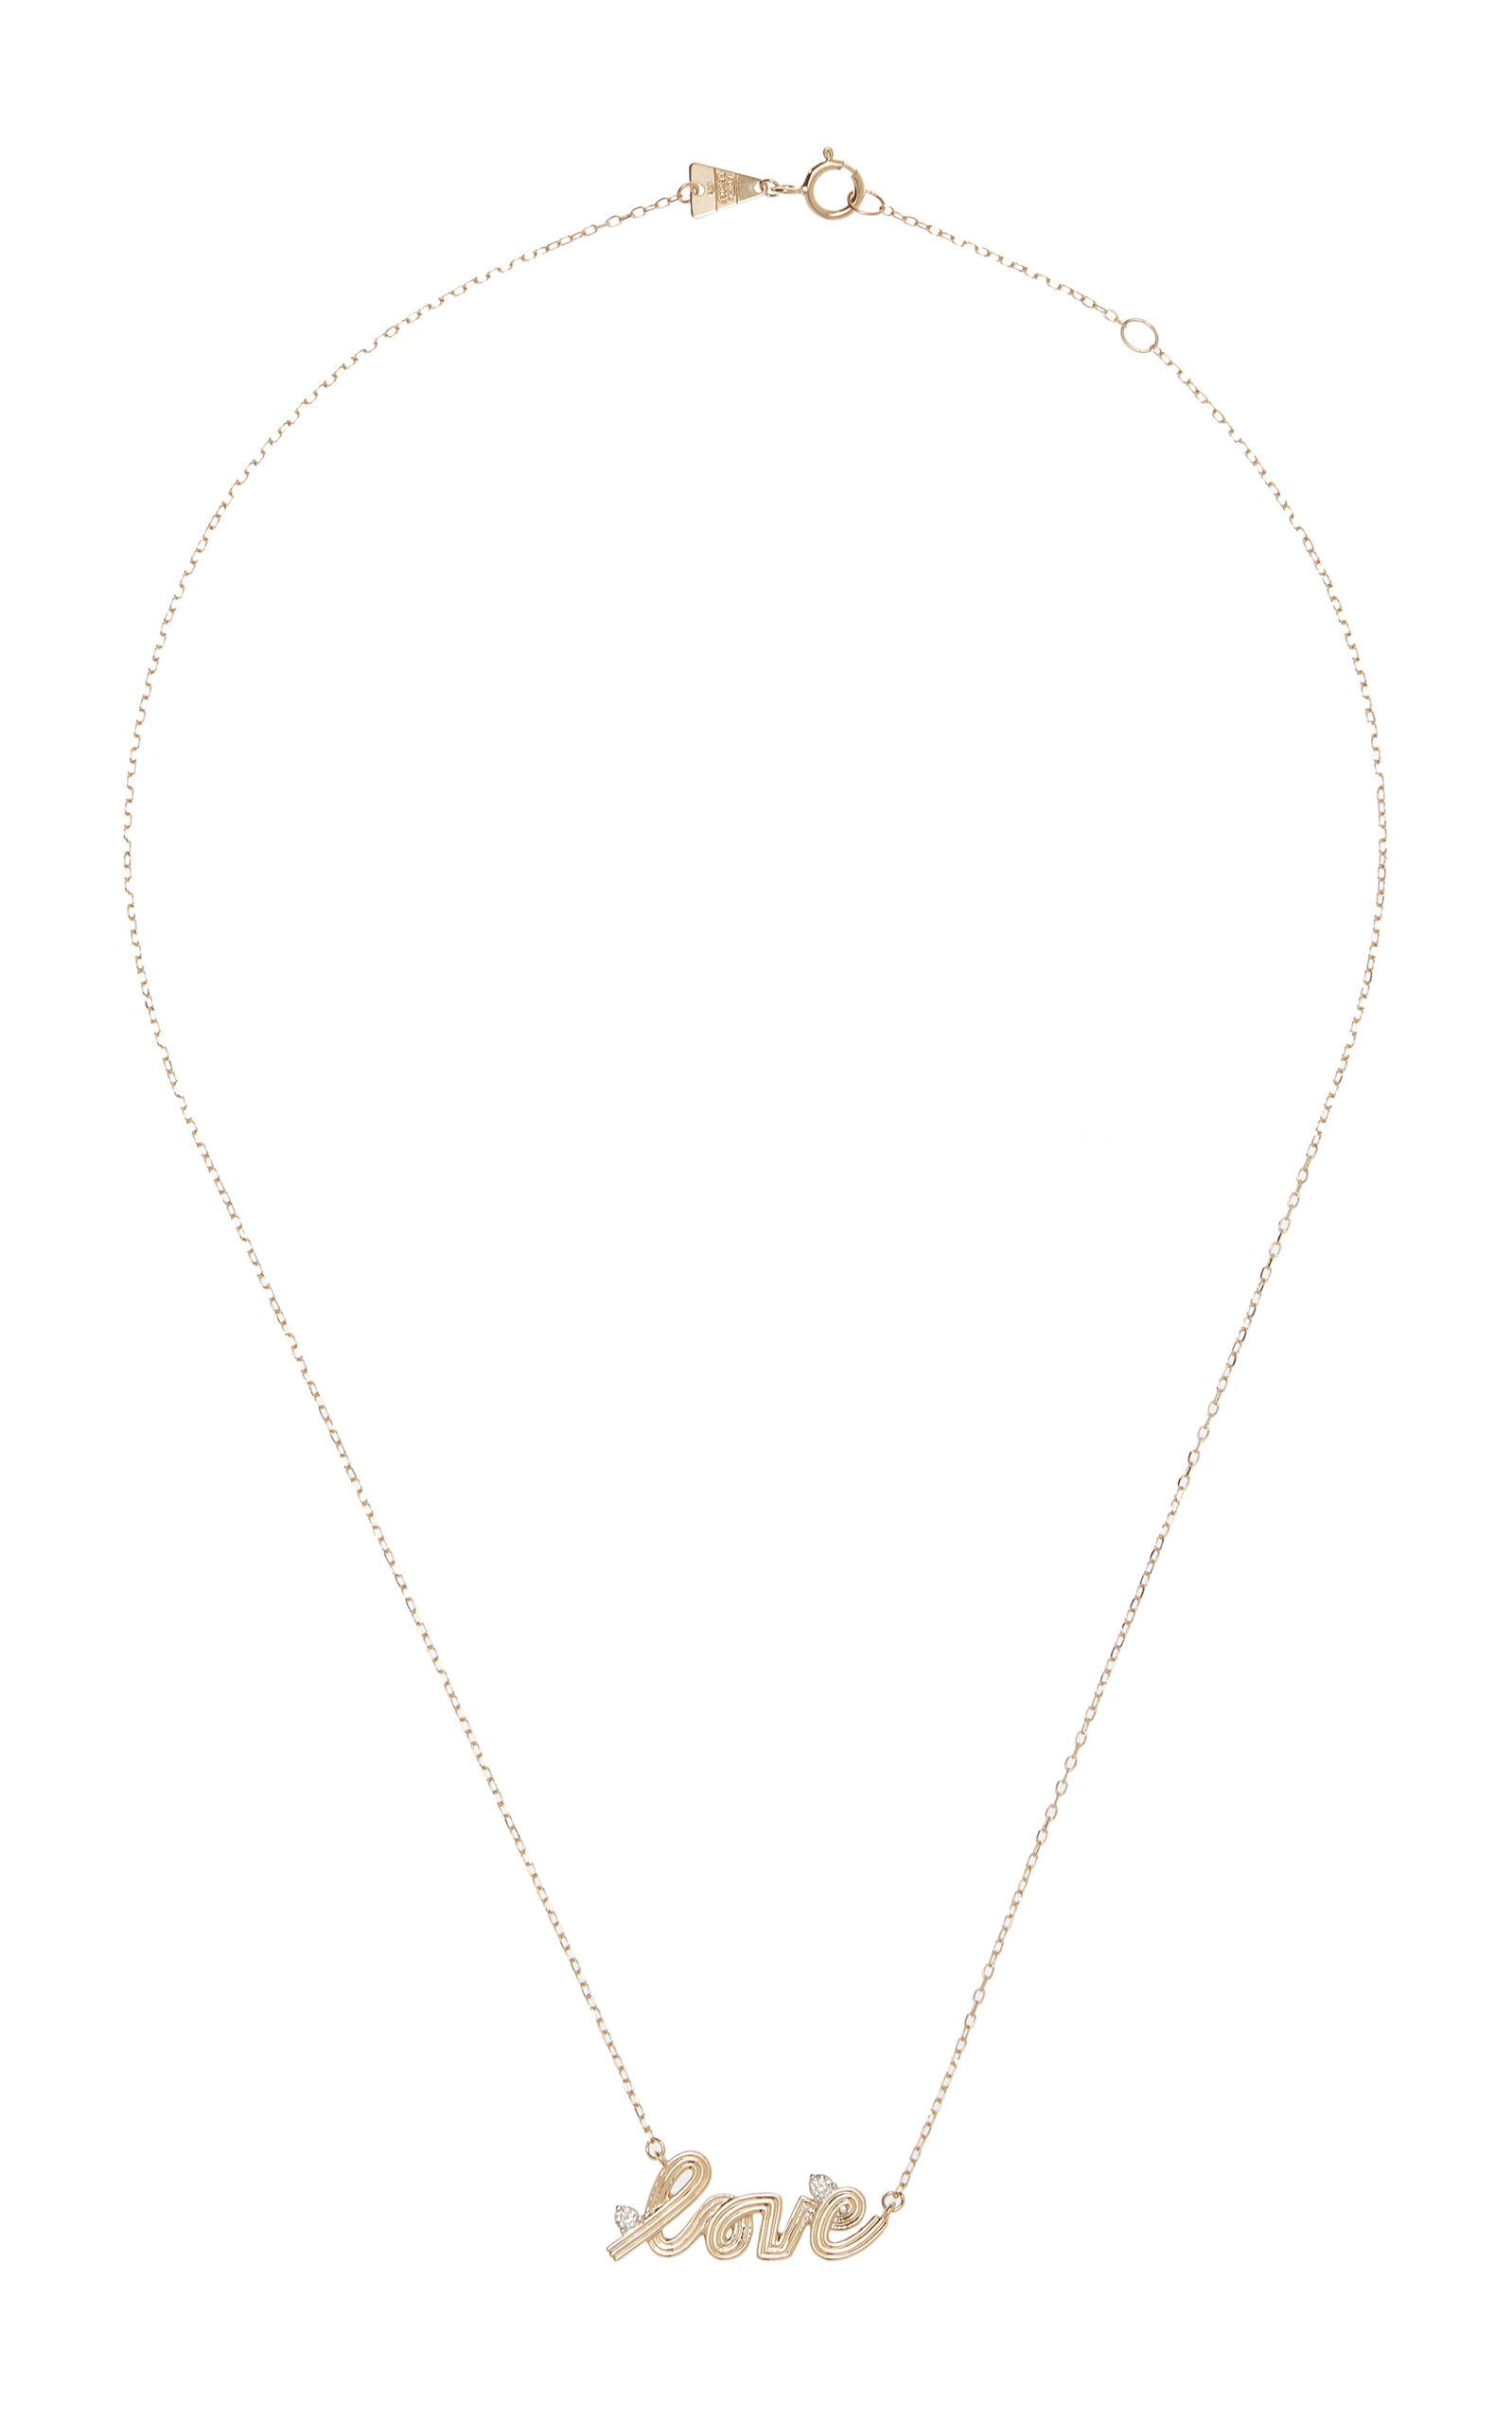 Adina Reyter Women's Groovy 14k Yellow Gold Diamond Necklace